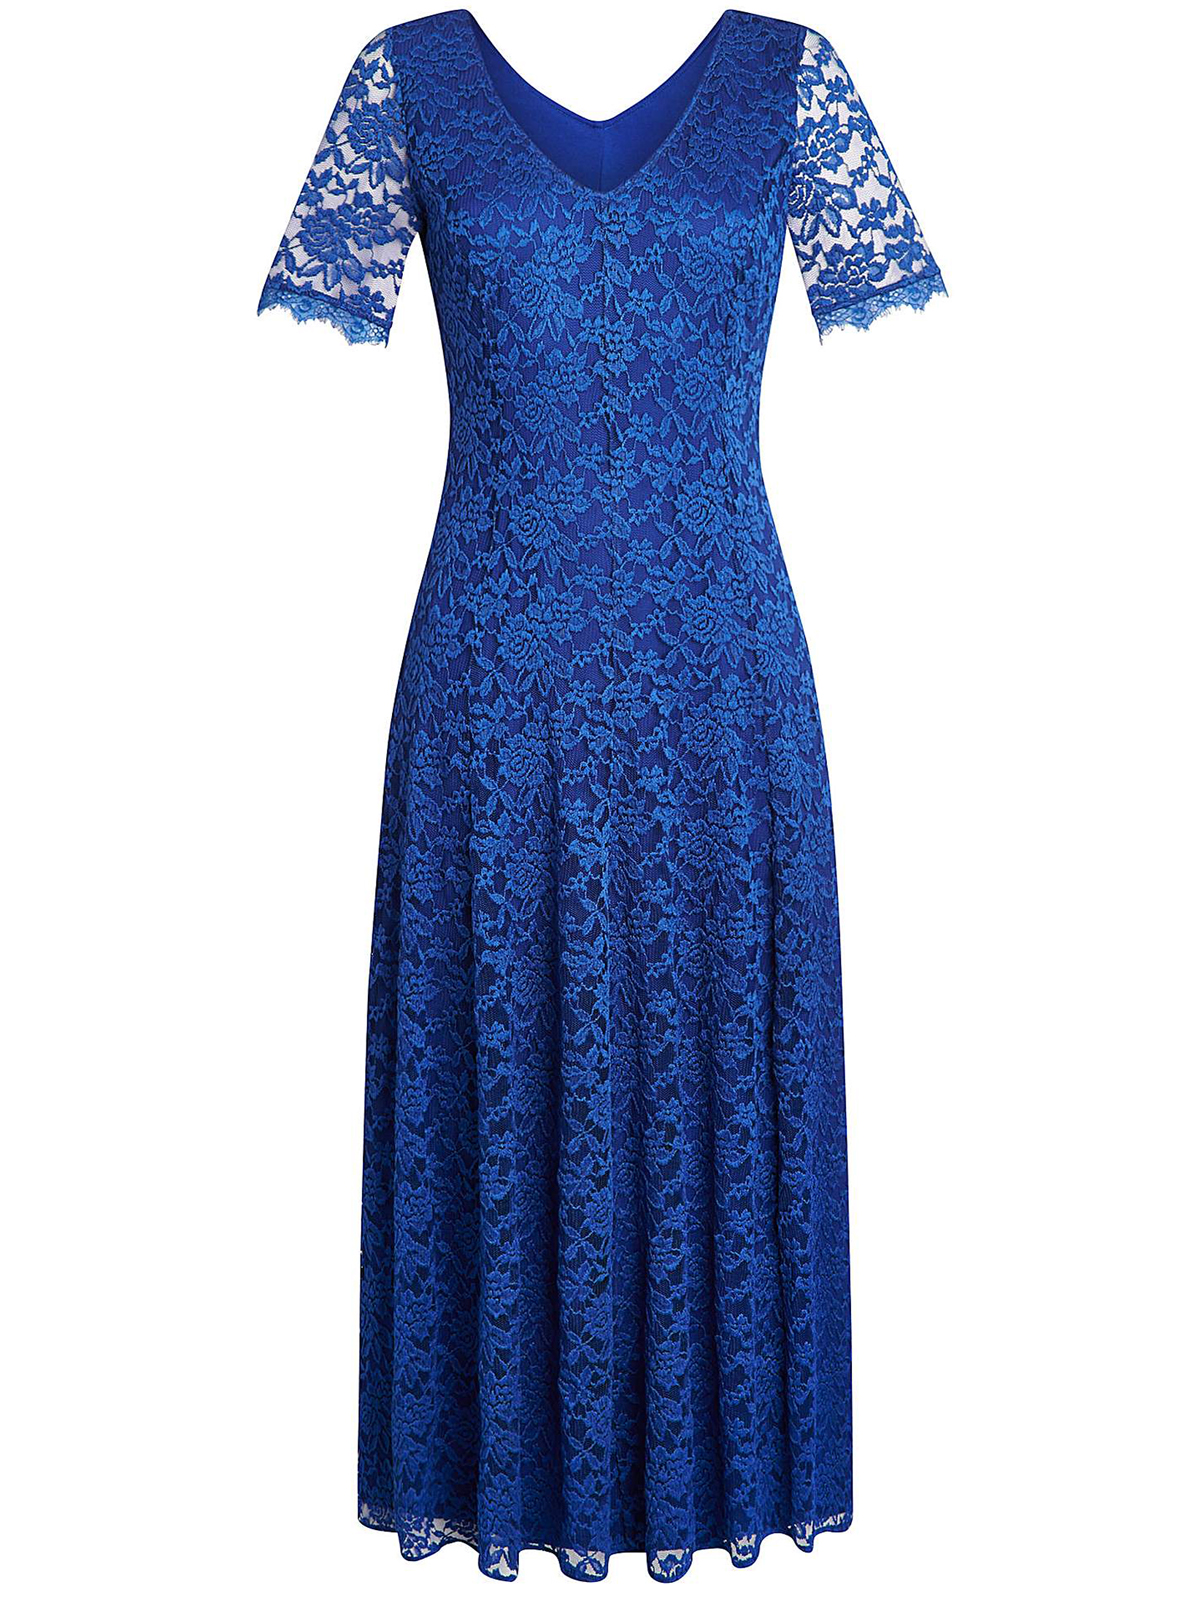 Joanna Hope - - Joanna Hope COBALT-BLUE Floral Lace Maxi Dress - Size ...